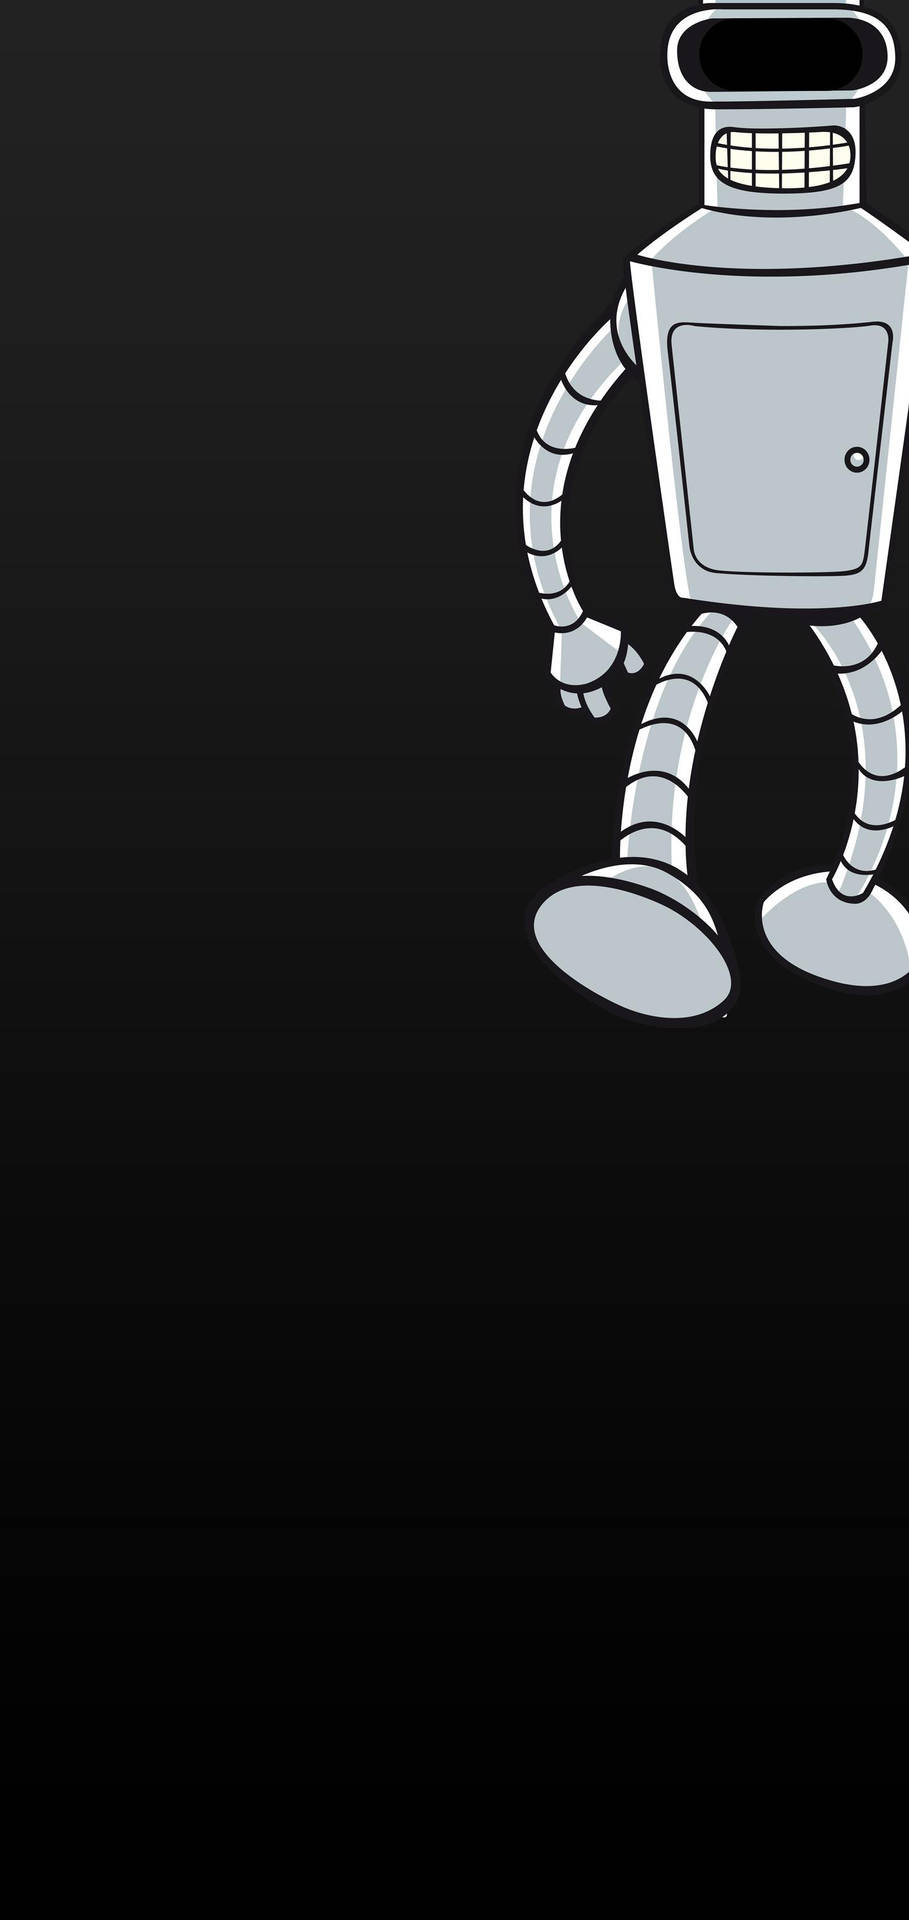 S10+ Bender From Futurama